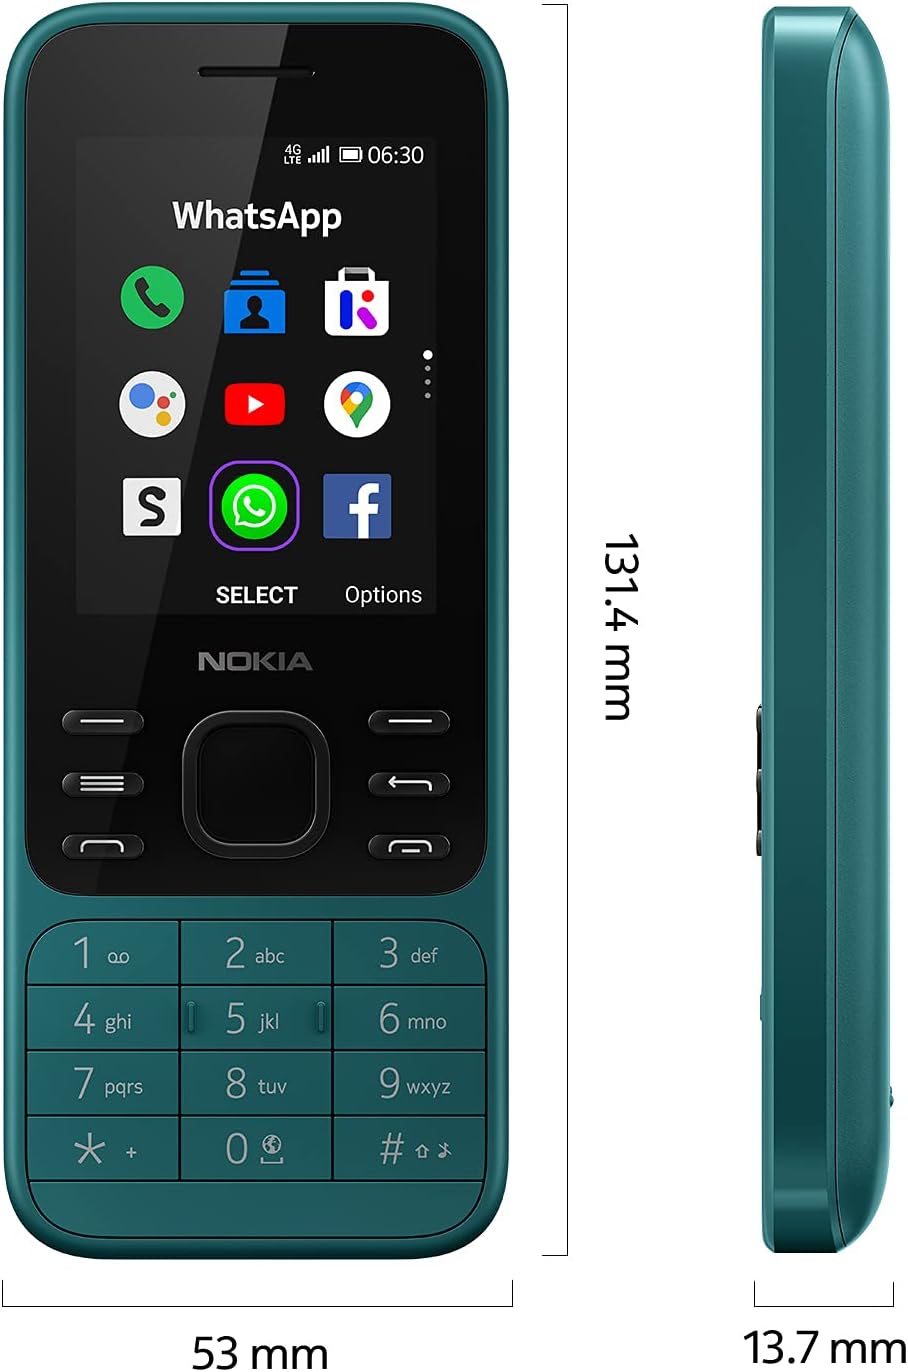 Nokia 6300 4G Unlocked Dual Sim WiFi Hotspot Social Apps Google Maps and Assistant Phone (Cyan Green)